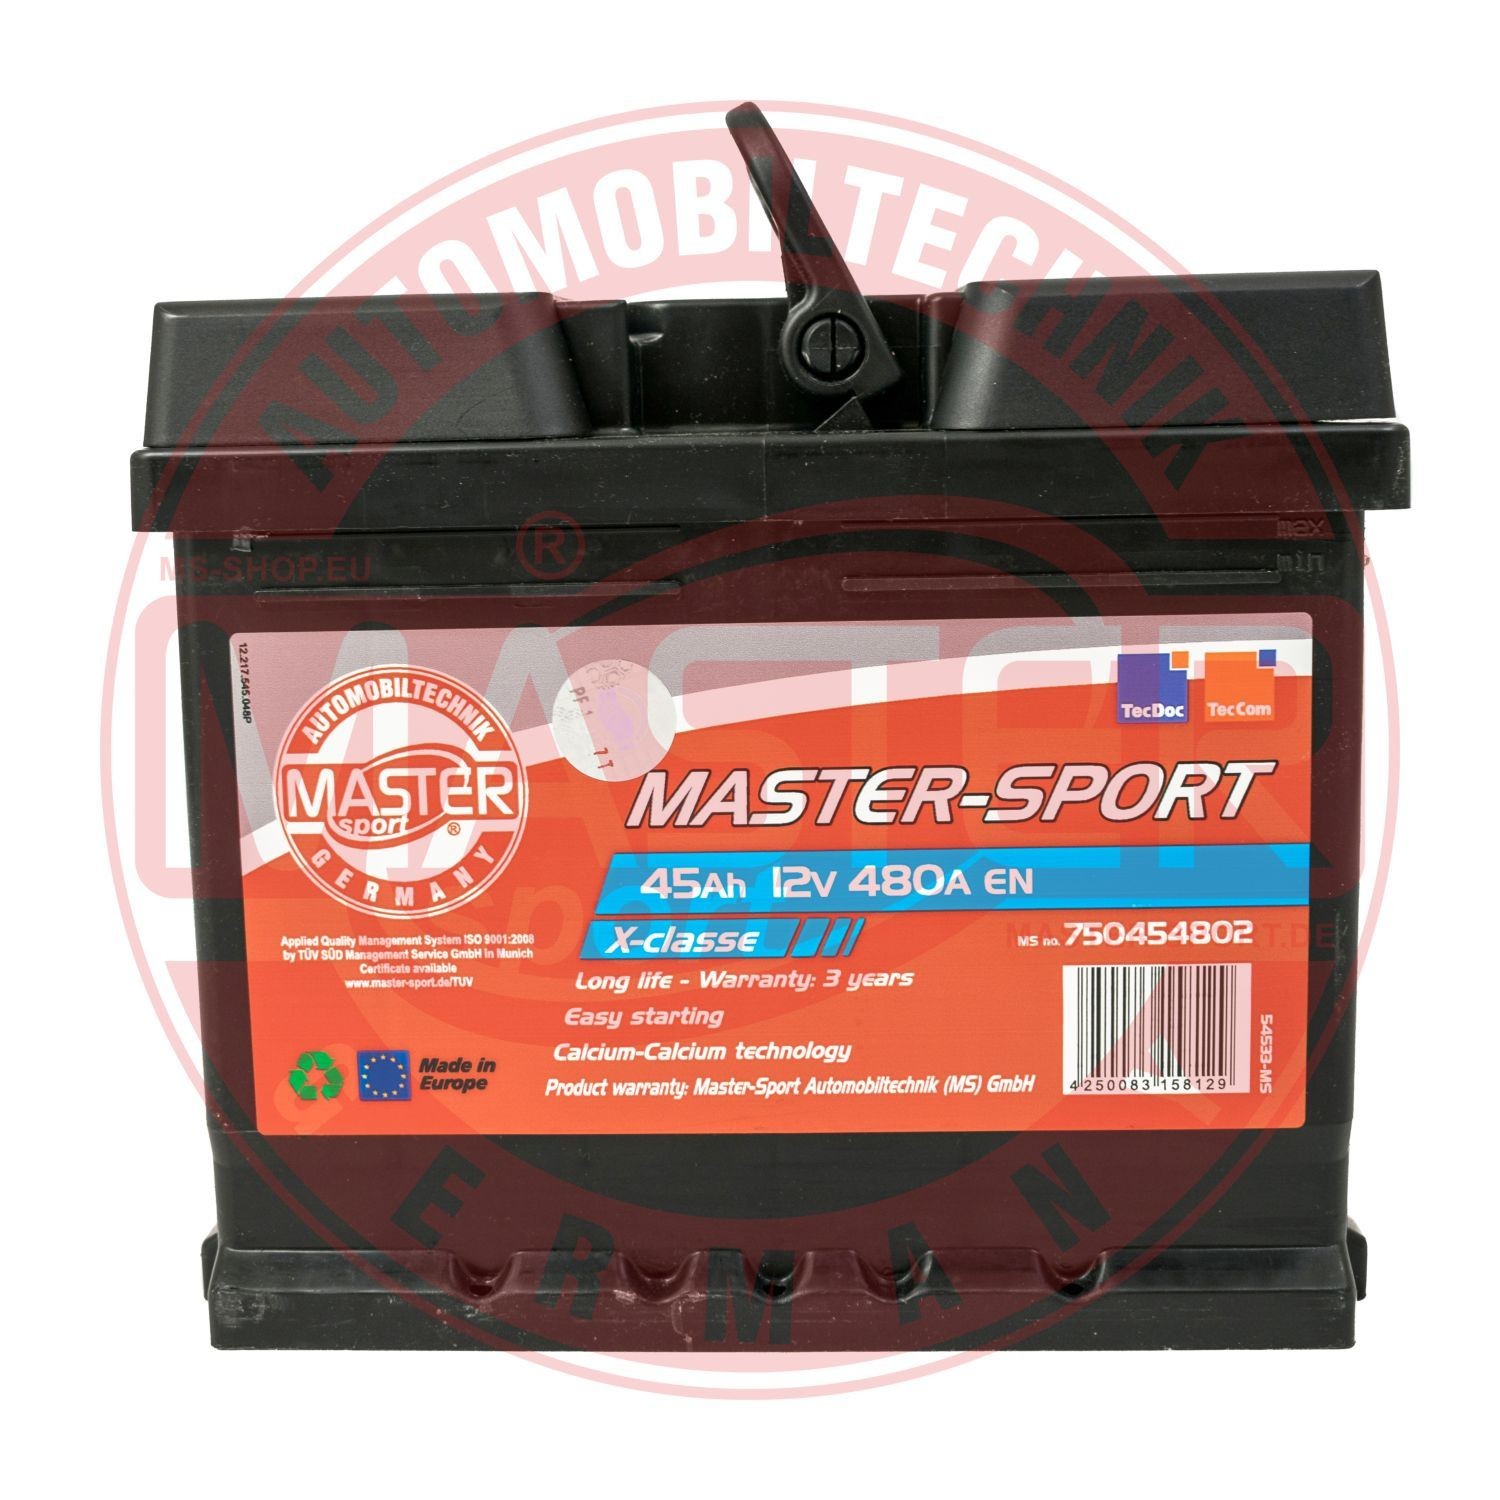 780454802 MASTER-SPORT Car battery Volkswagen PASSAT review